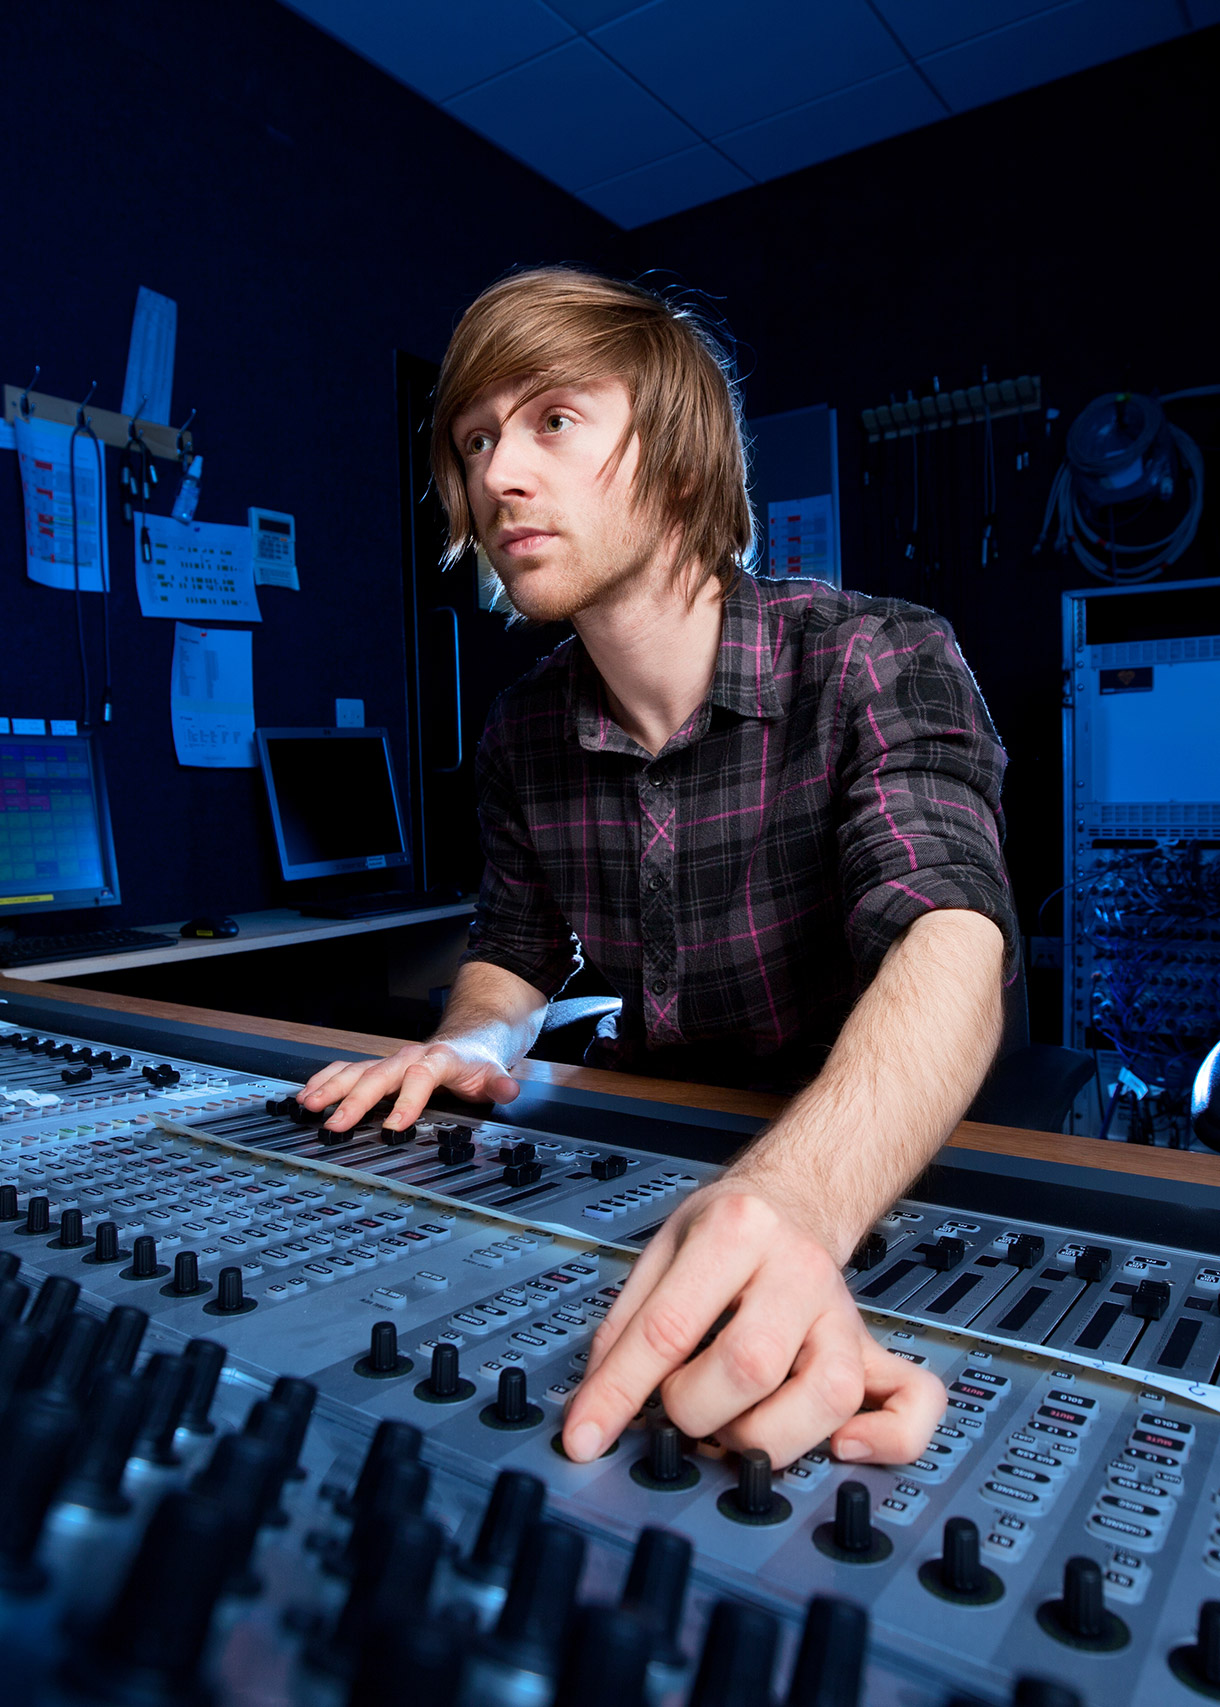 An audio engineer using a sound board inside a studio.